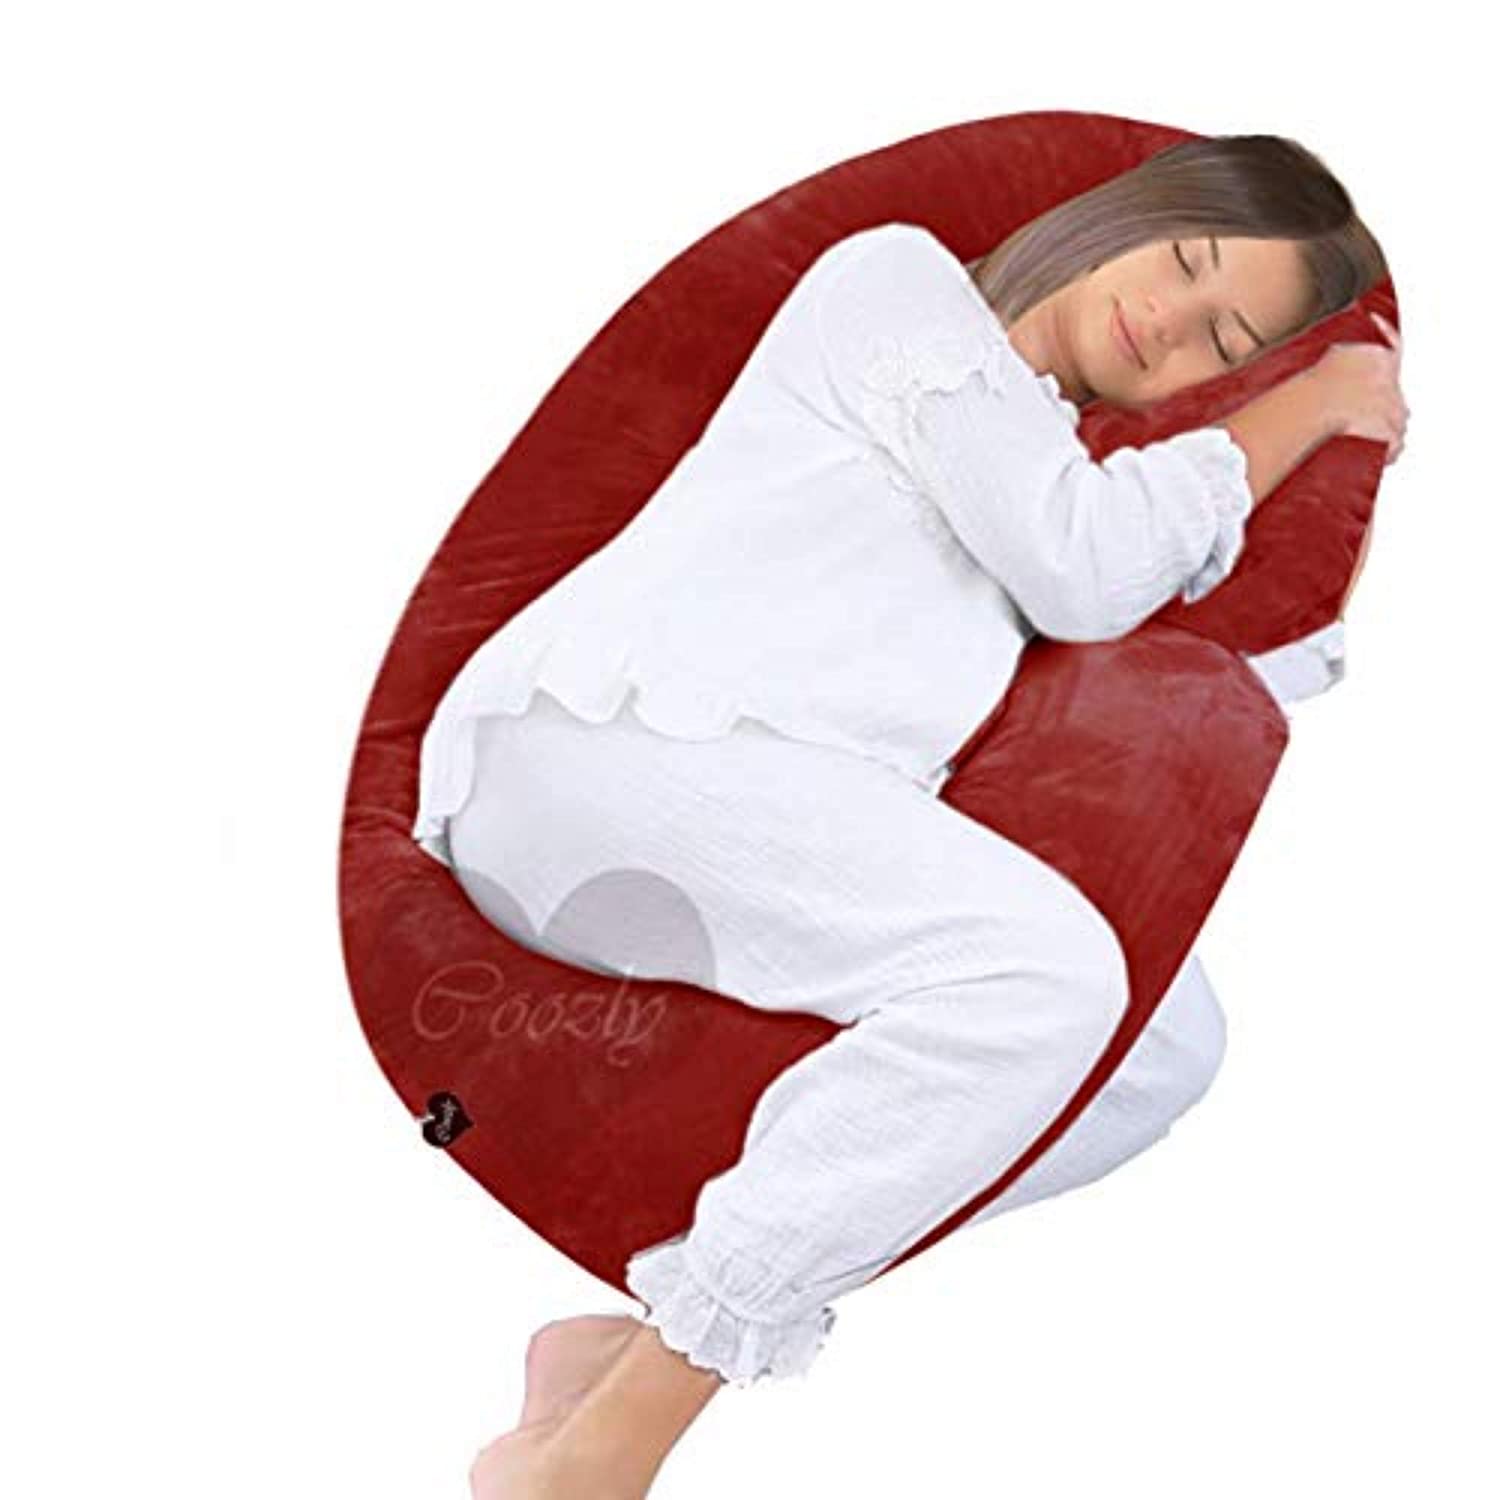 Red Velvet - Coozly Alpha Basic Maternity Pillow | Pregnancy Pillow